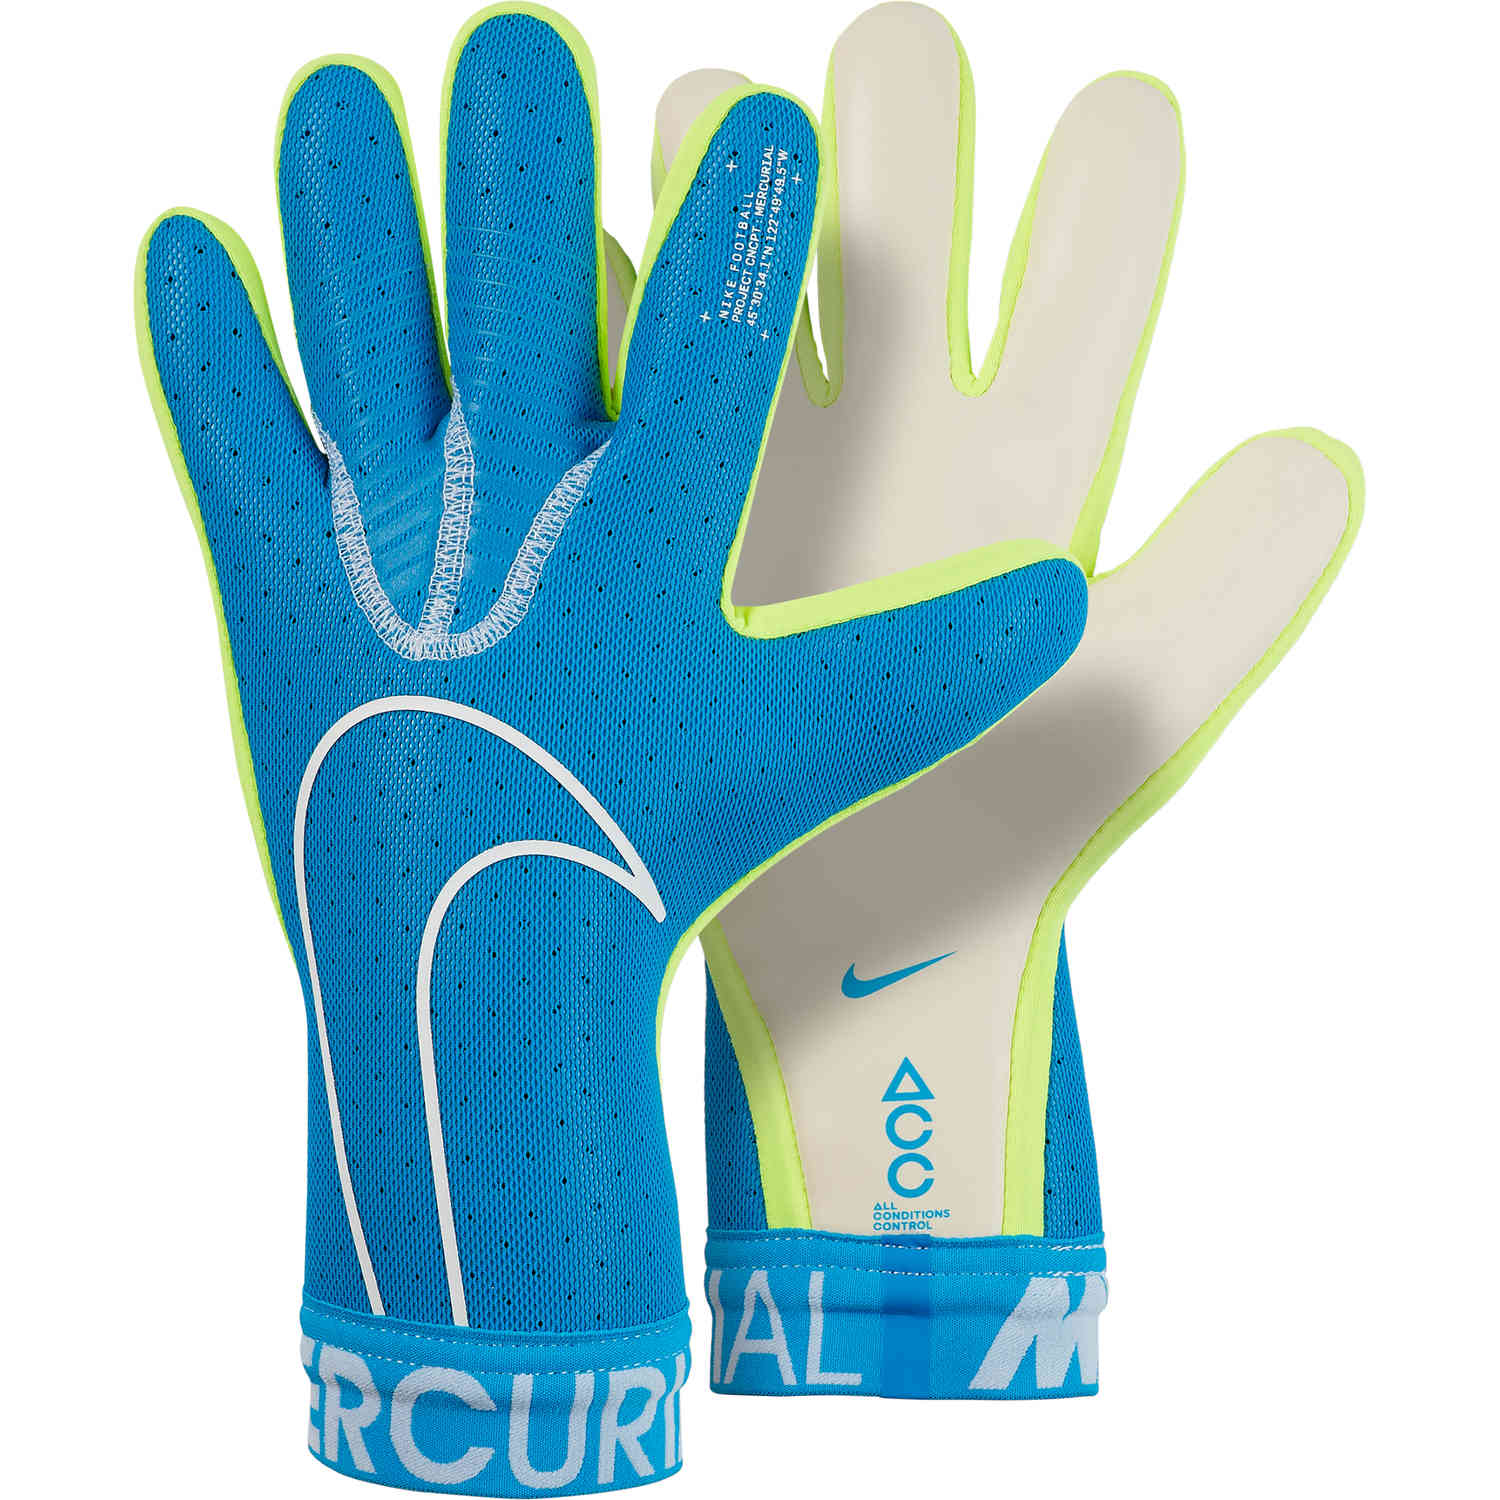 mercurial touch elite gloves